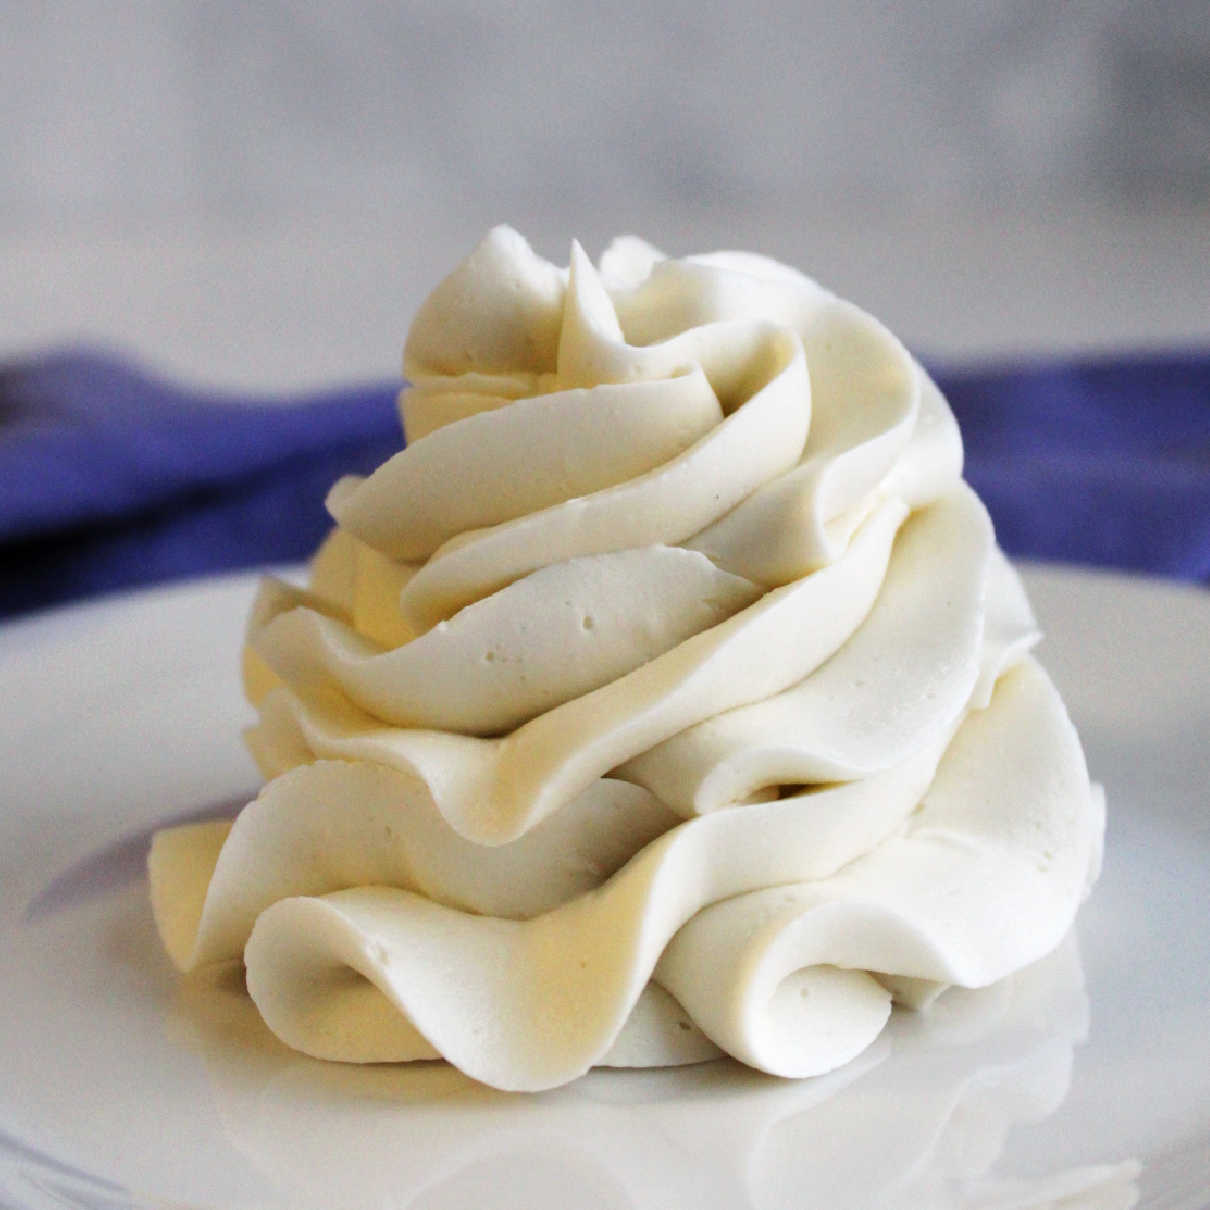 Ruffled swirl of white faux swiss meringue buttercream frosting.